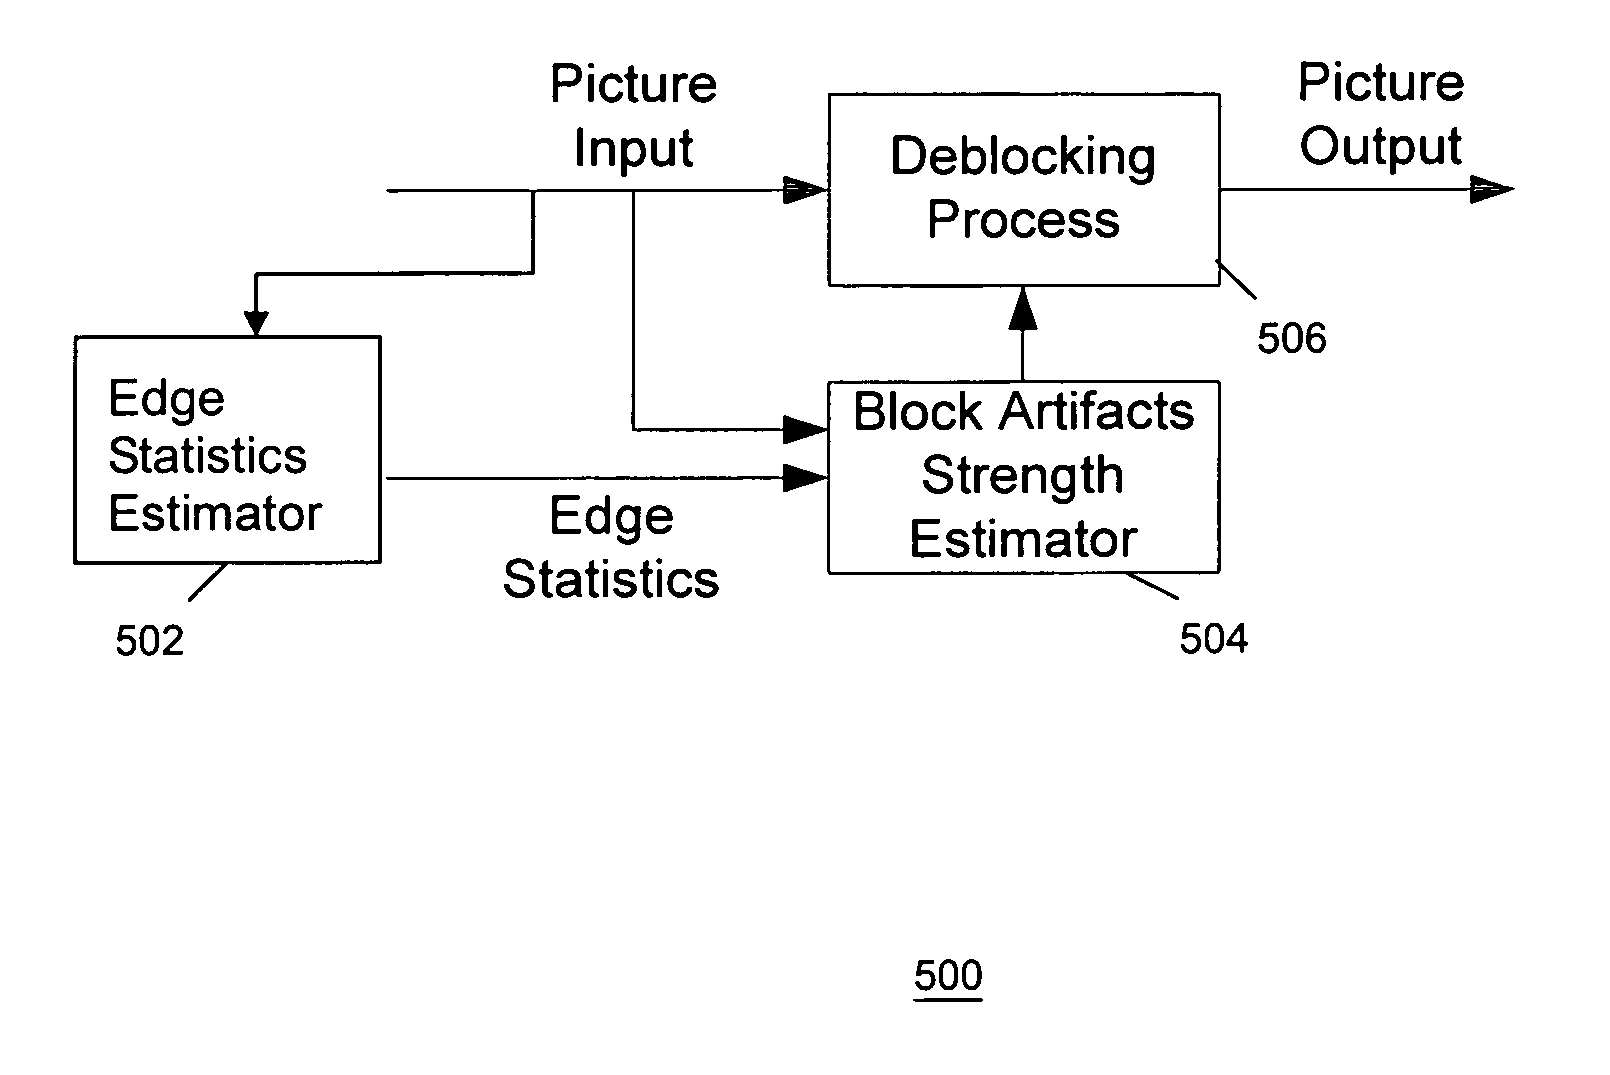 Estimation of block artifact strength based on edge statistics